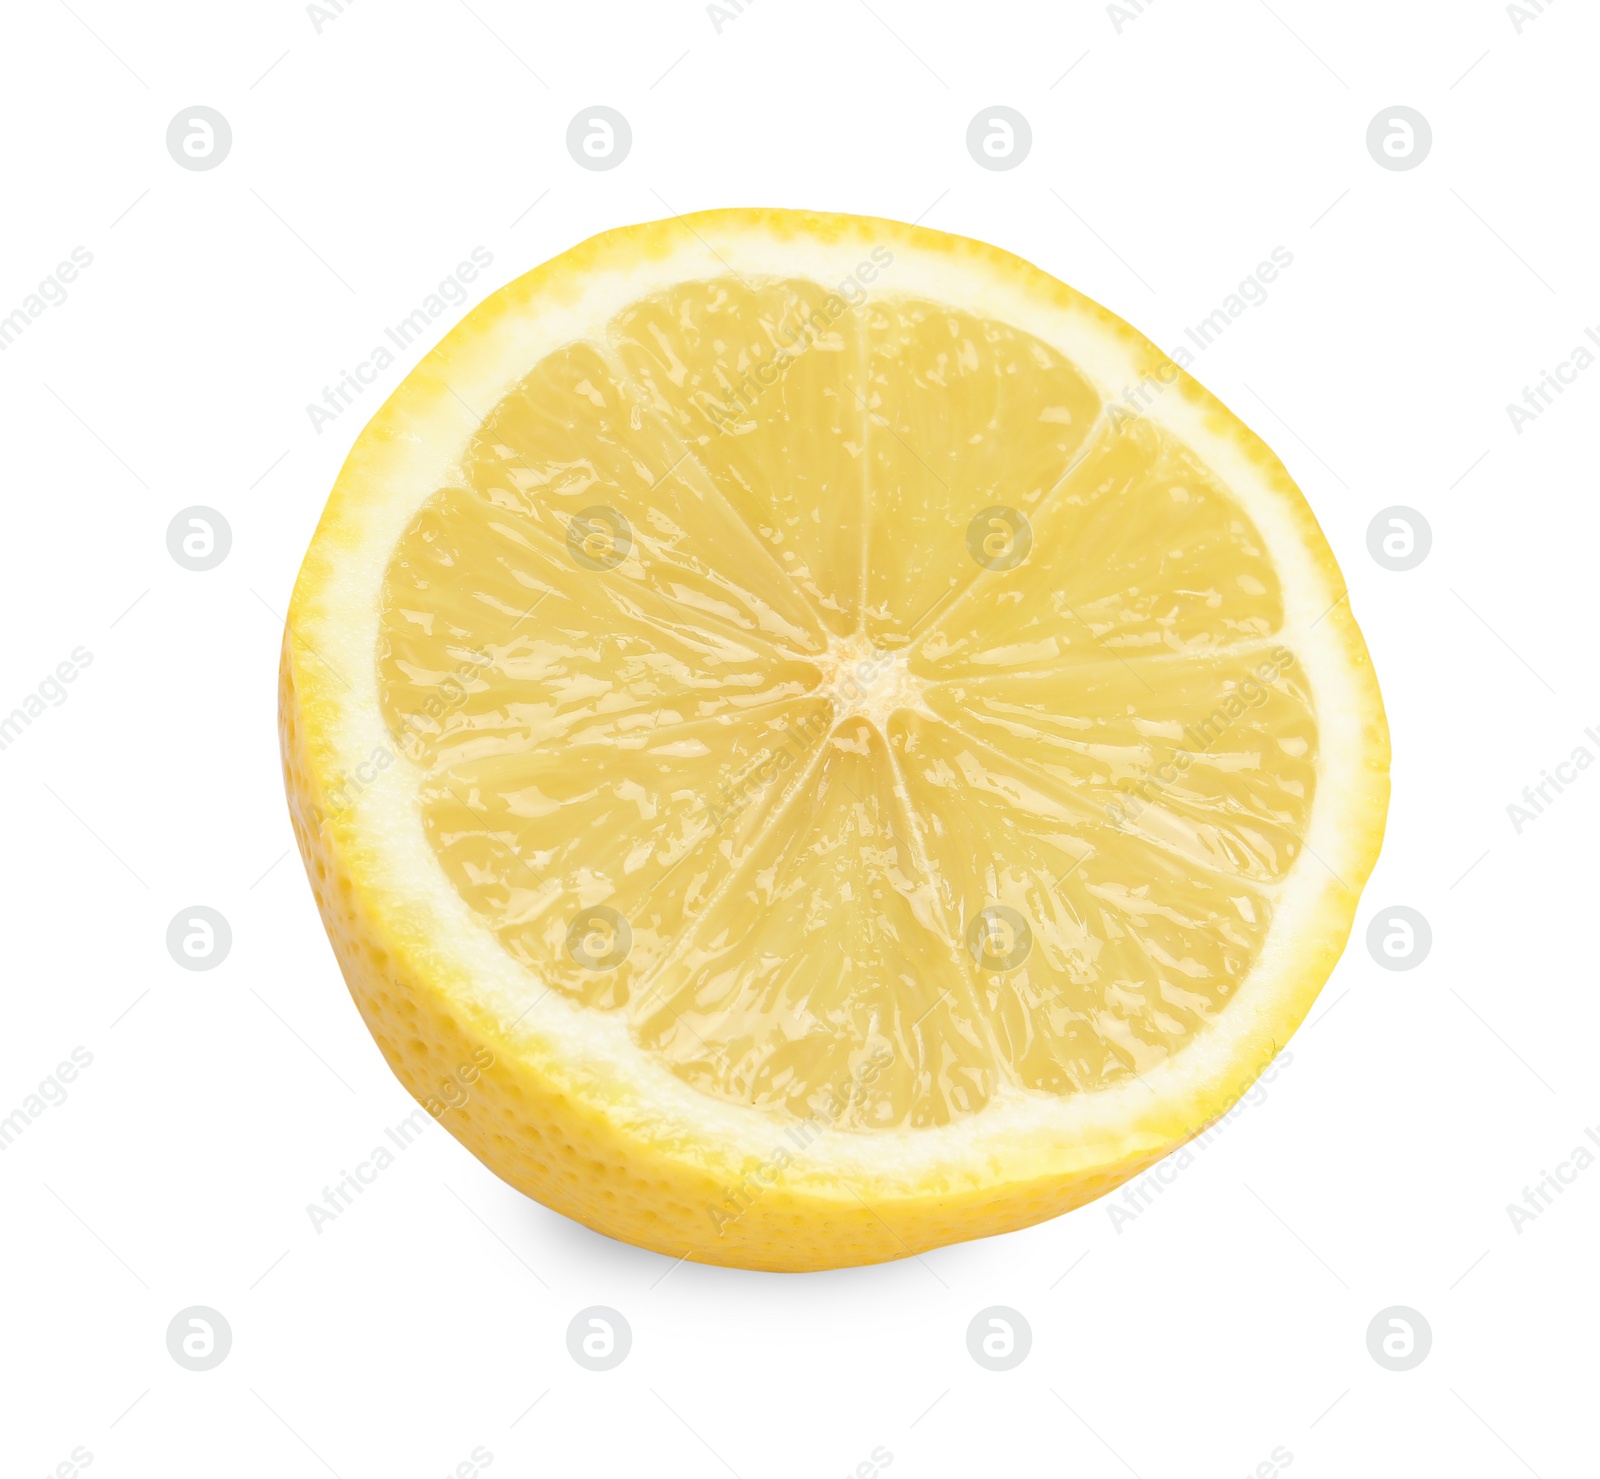 Photo of Citrus fruit. Half of fresh lemon isolated on white